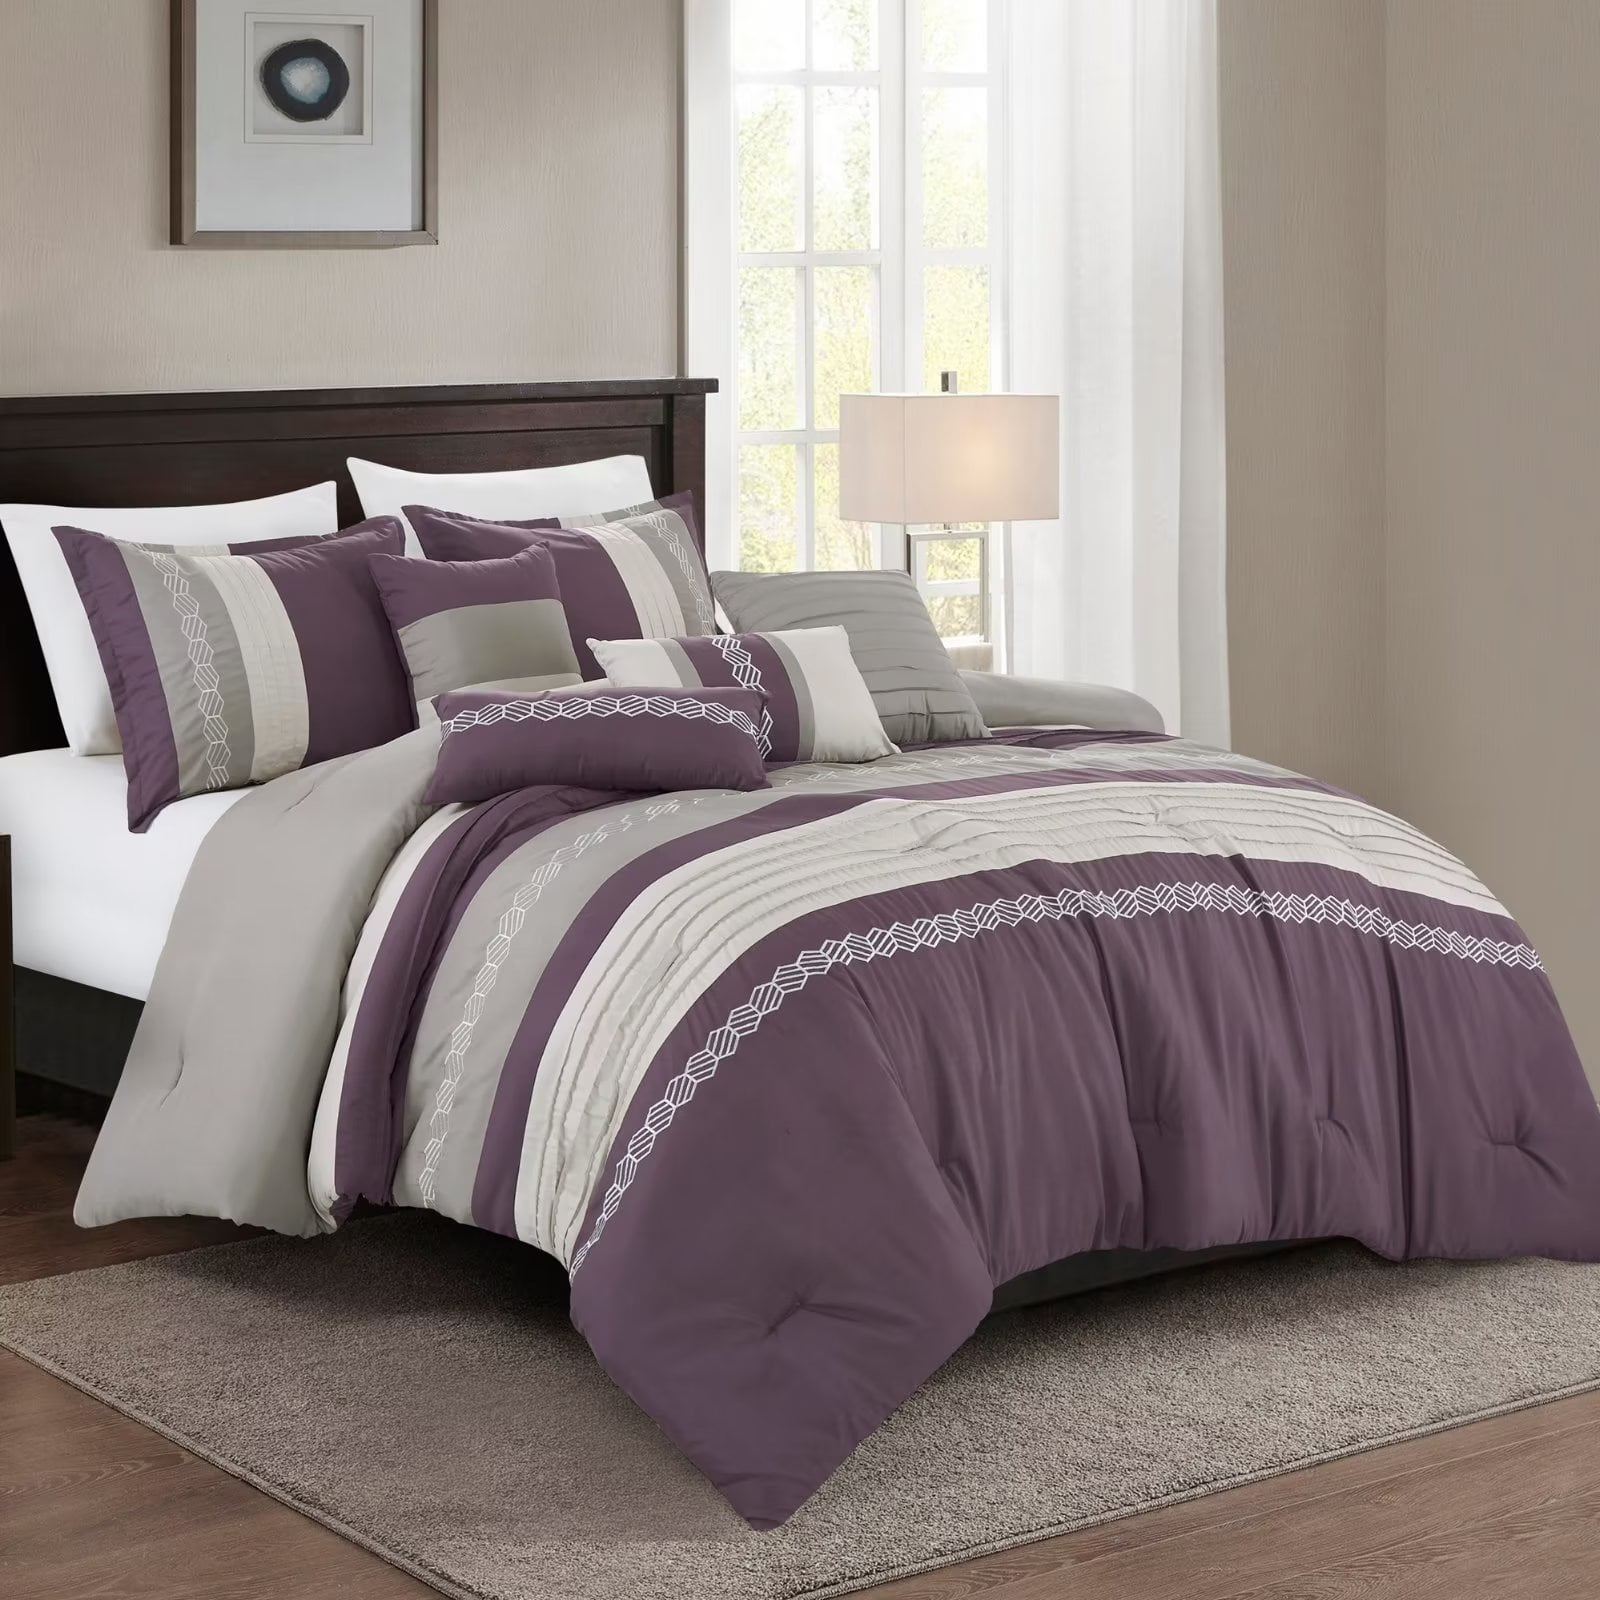 HGMart 7 Piece Bedding Comforter Set Luxury Bed In A Bag - King Size ...